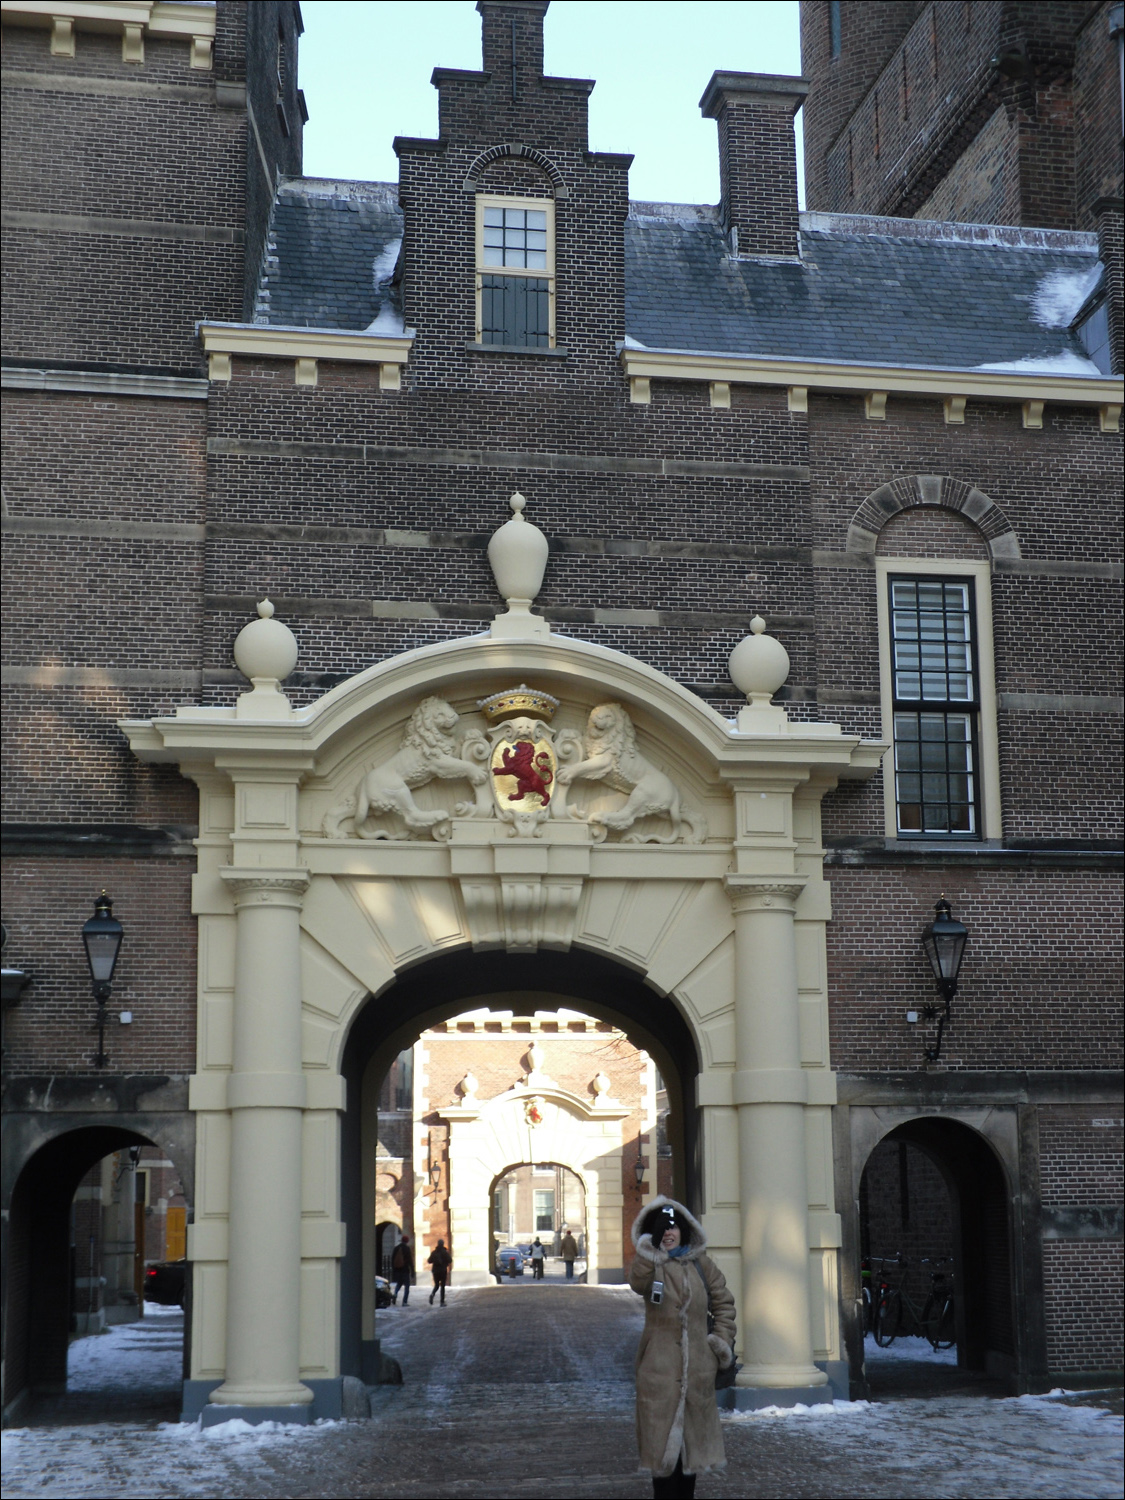 Hague-inside Binnenhof gates